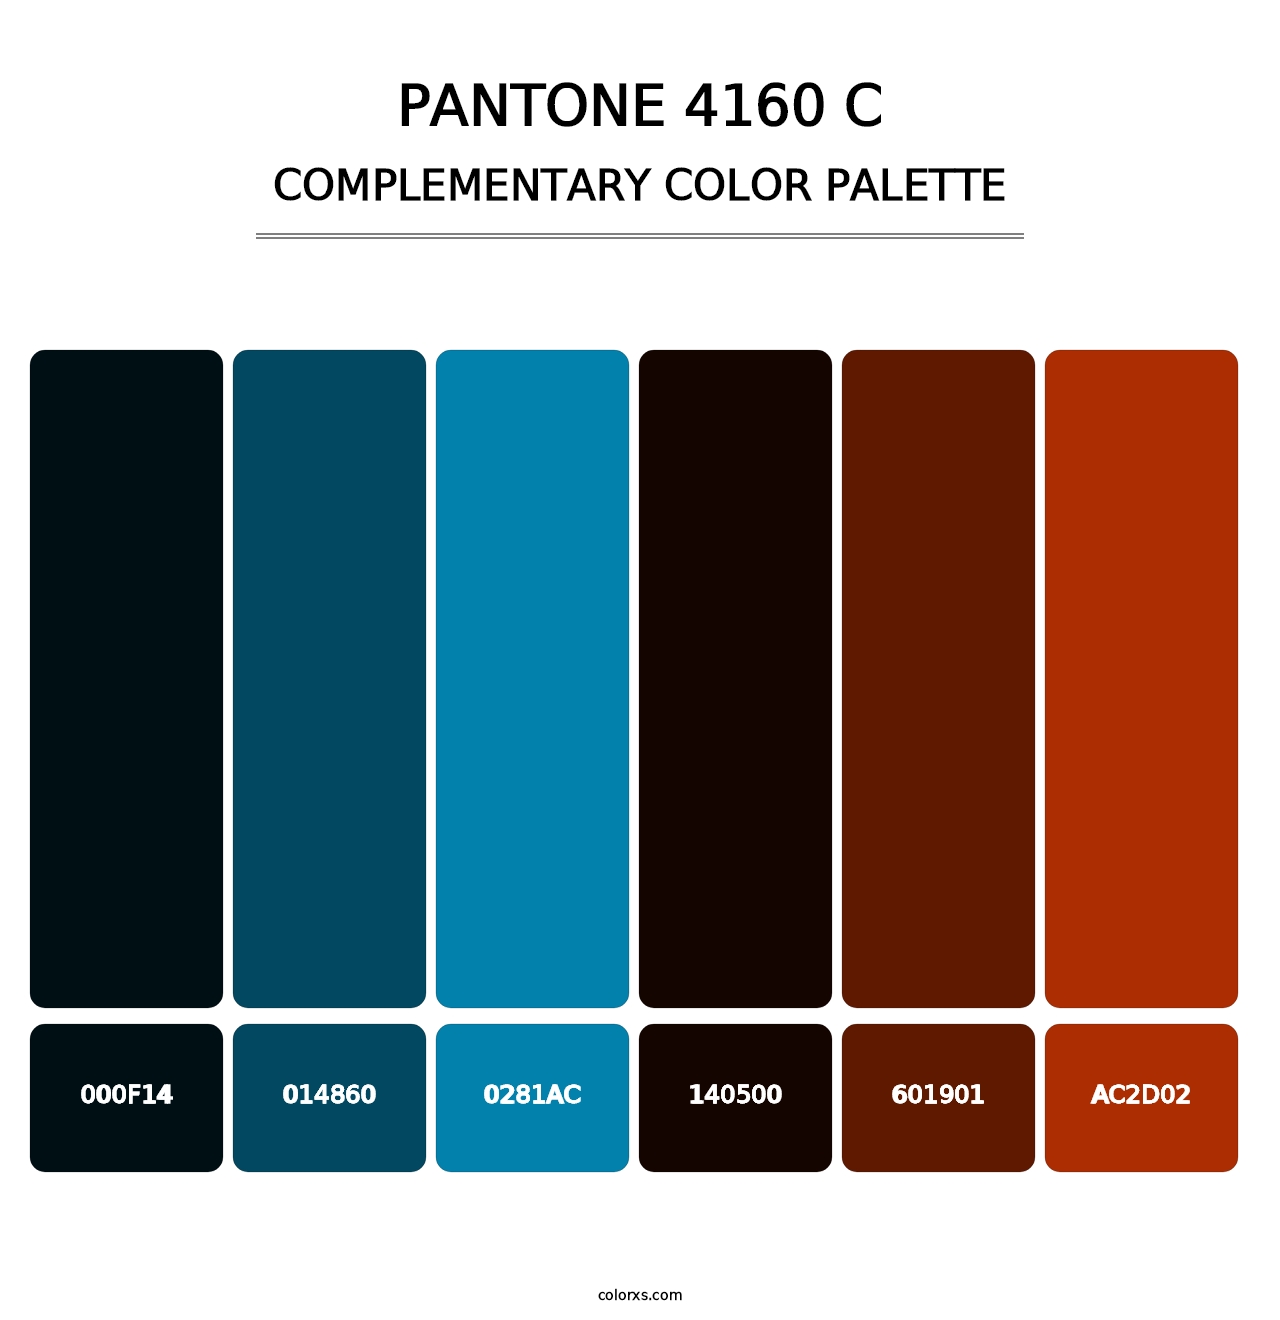 PANTONE 4160 C - Complementary Color Palette